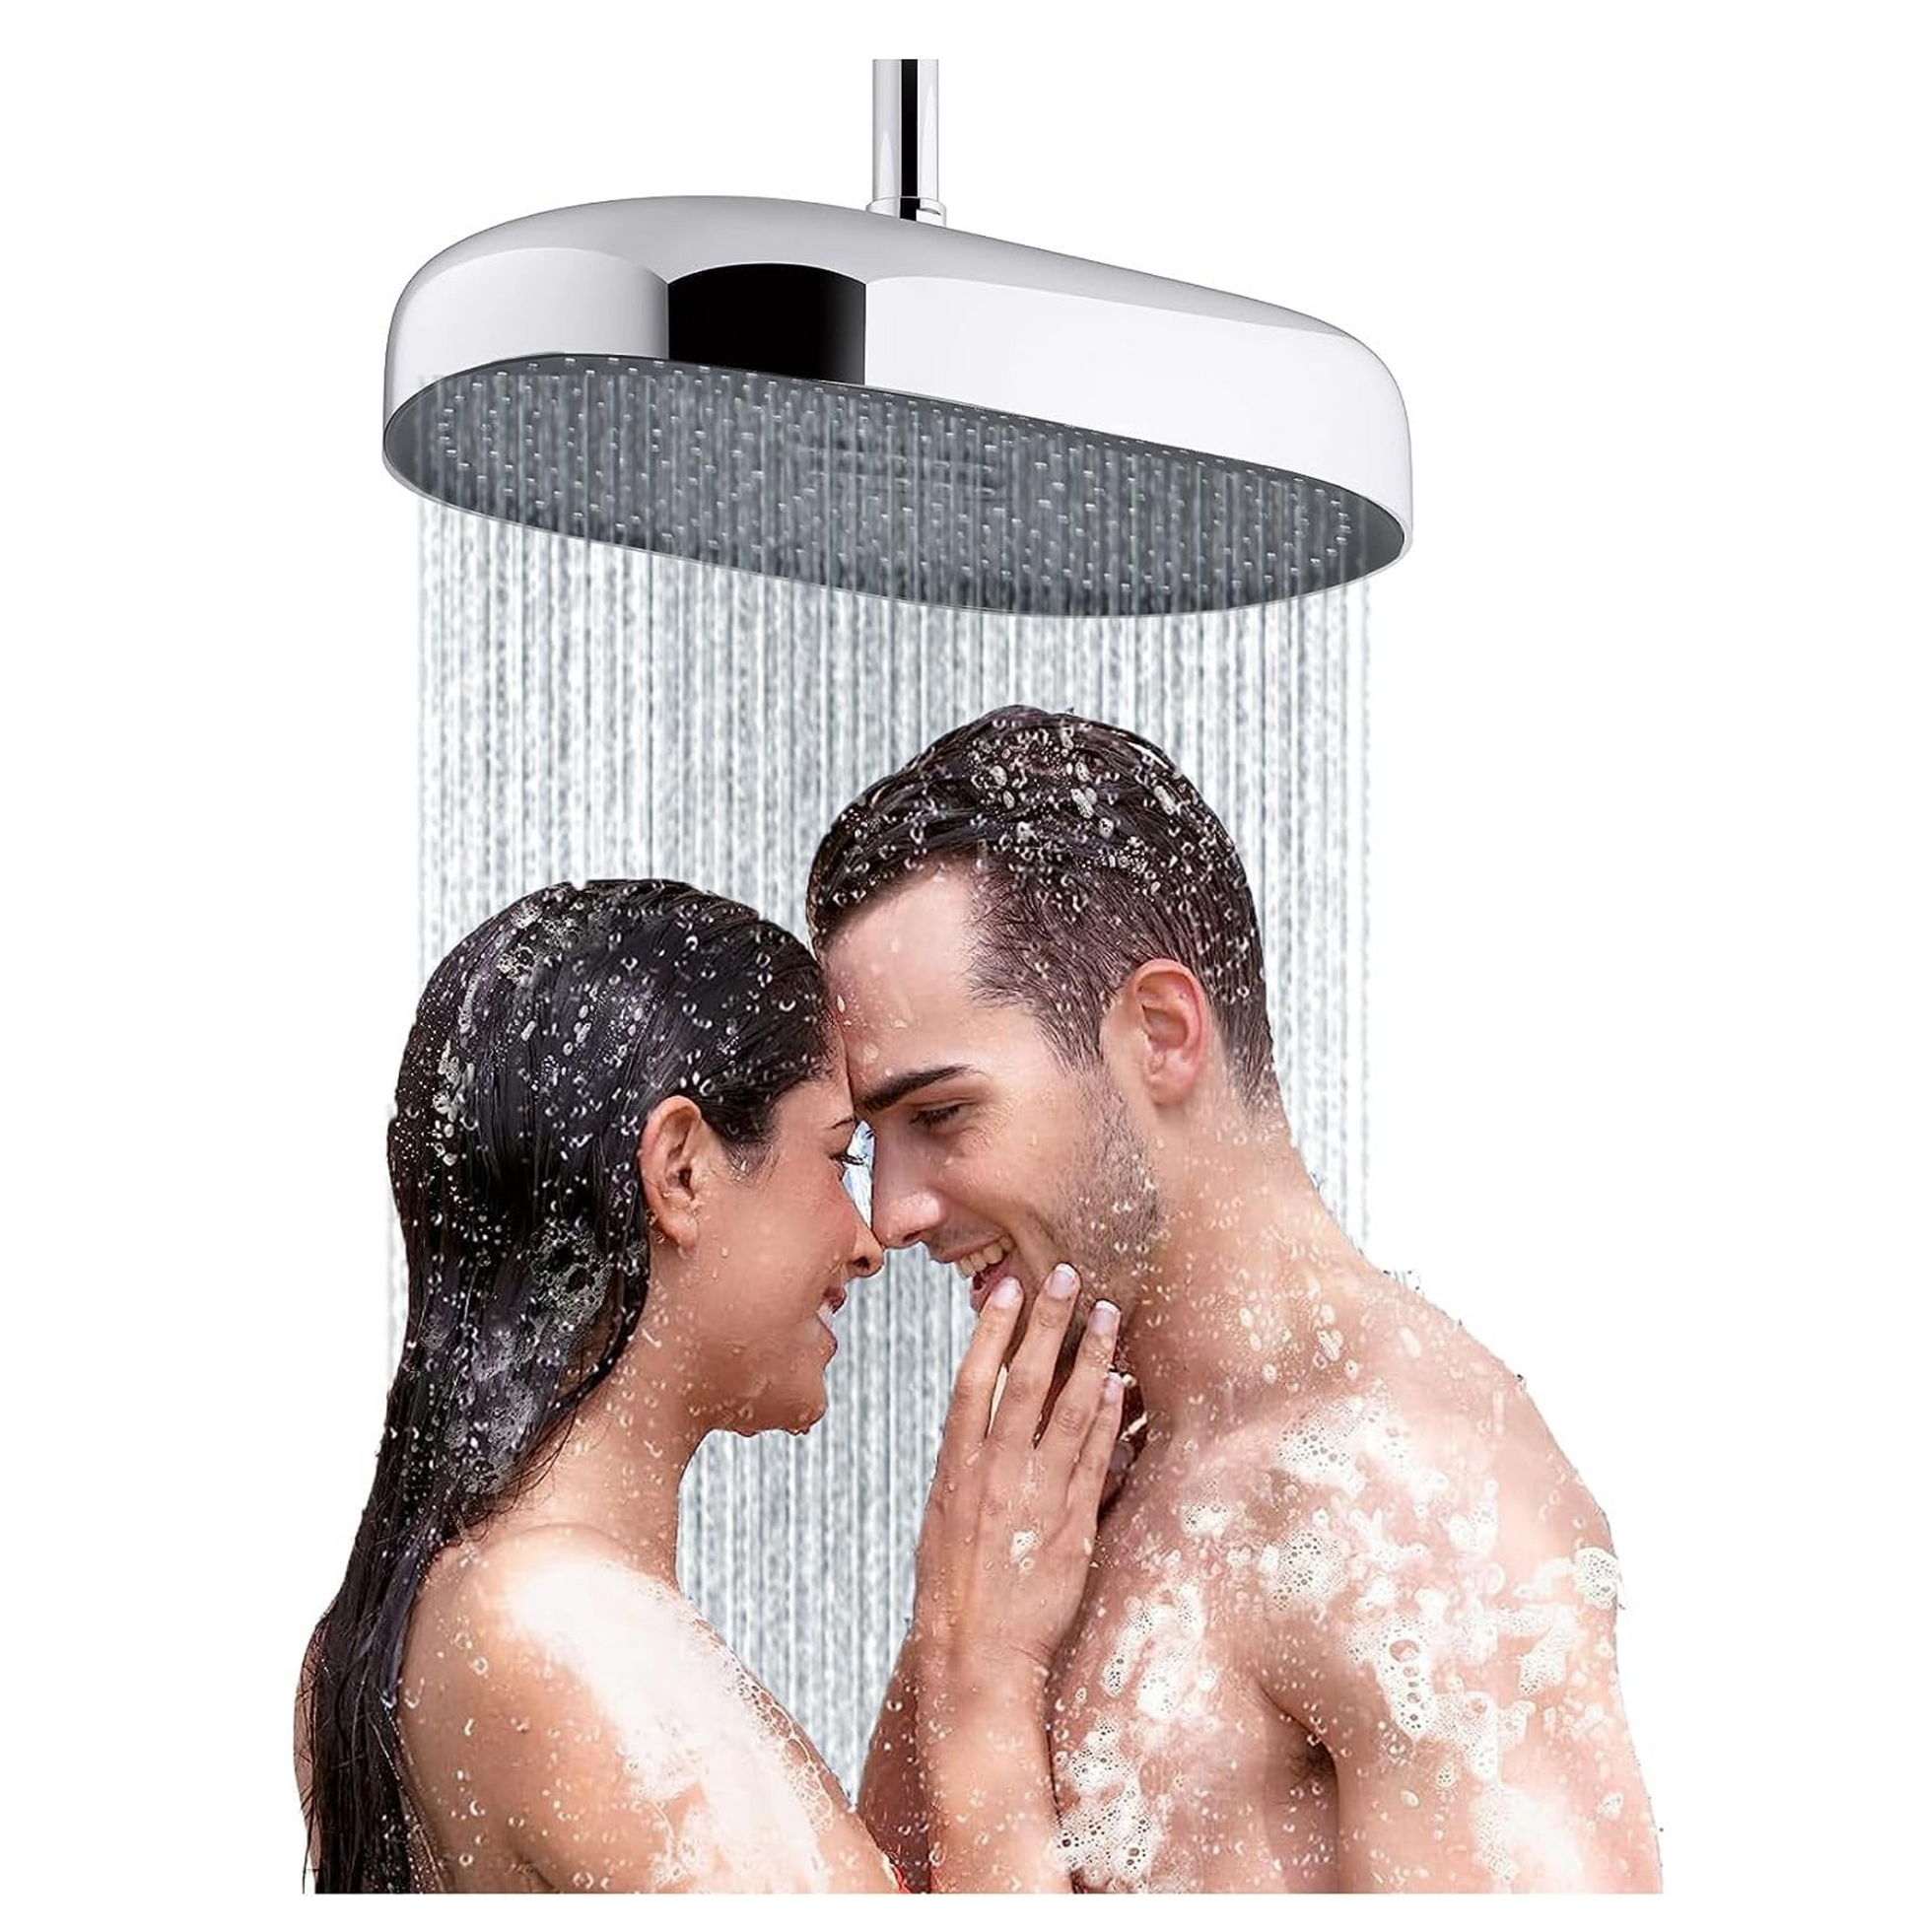 Fossa 14 inch Rain Shower Head Rectangle- Wide Coverage Rainfall Style Water Spray - Adjustable Showerhead Fossa Home